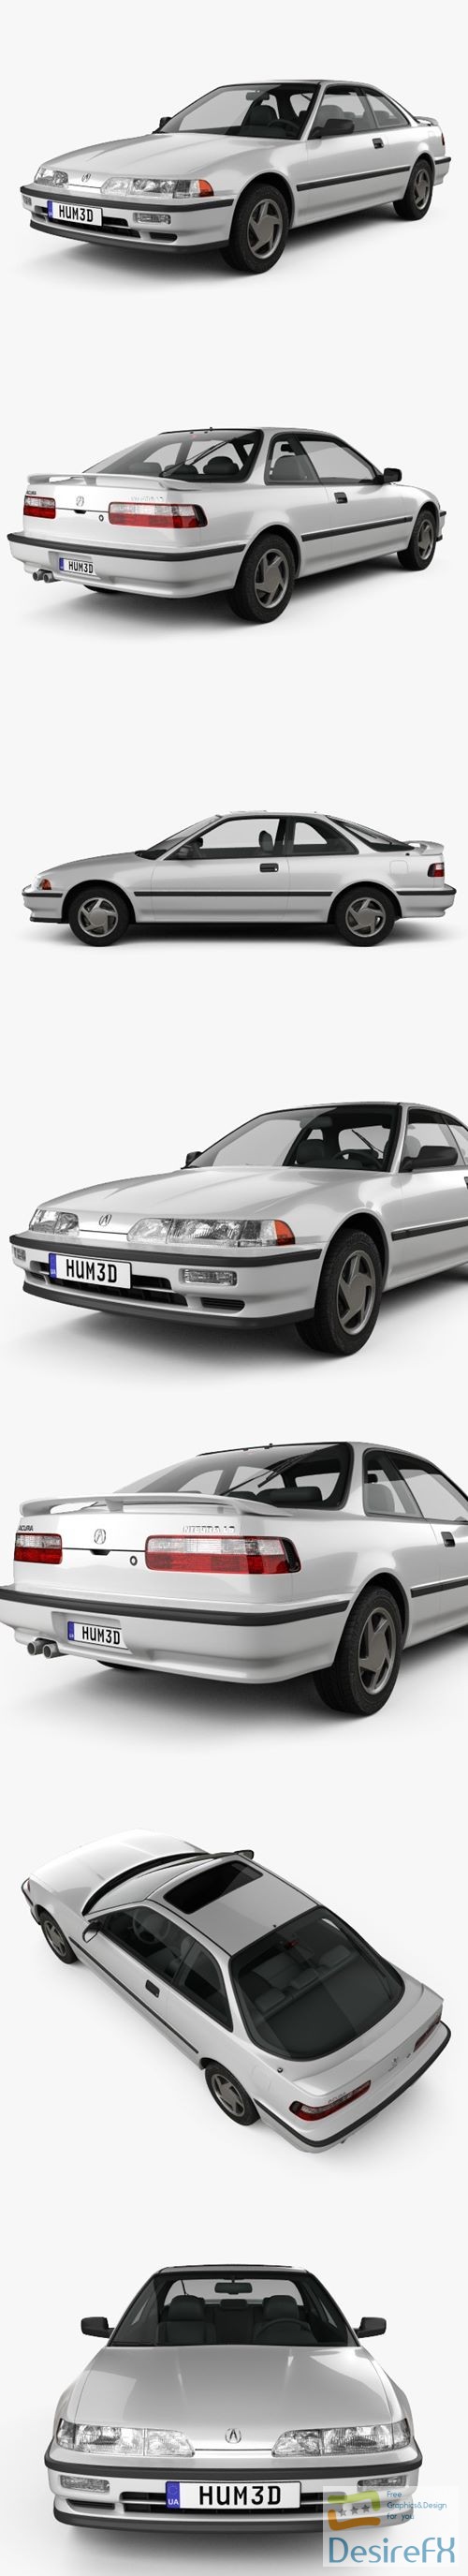 Acura Integra coupe 1991 3D Model